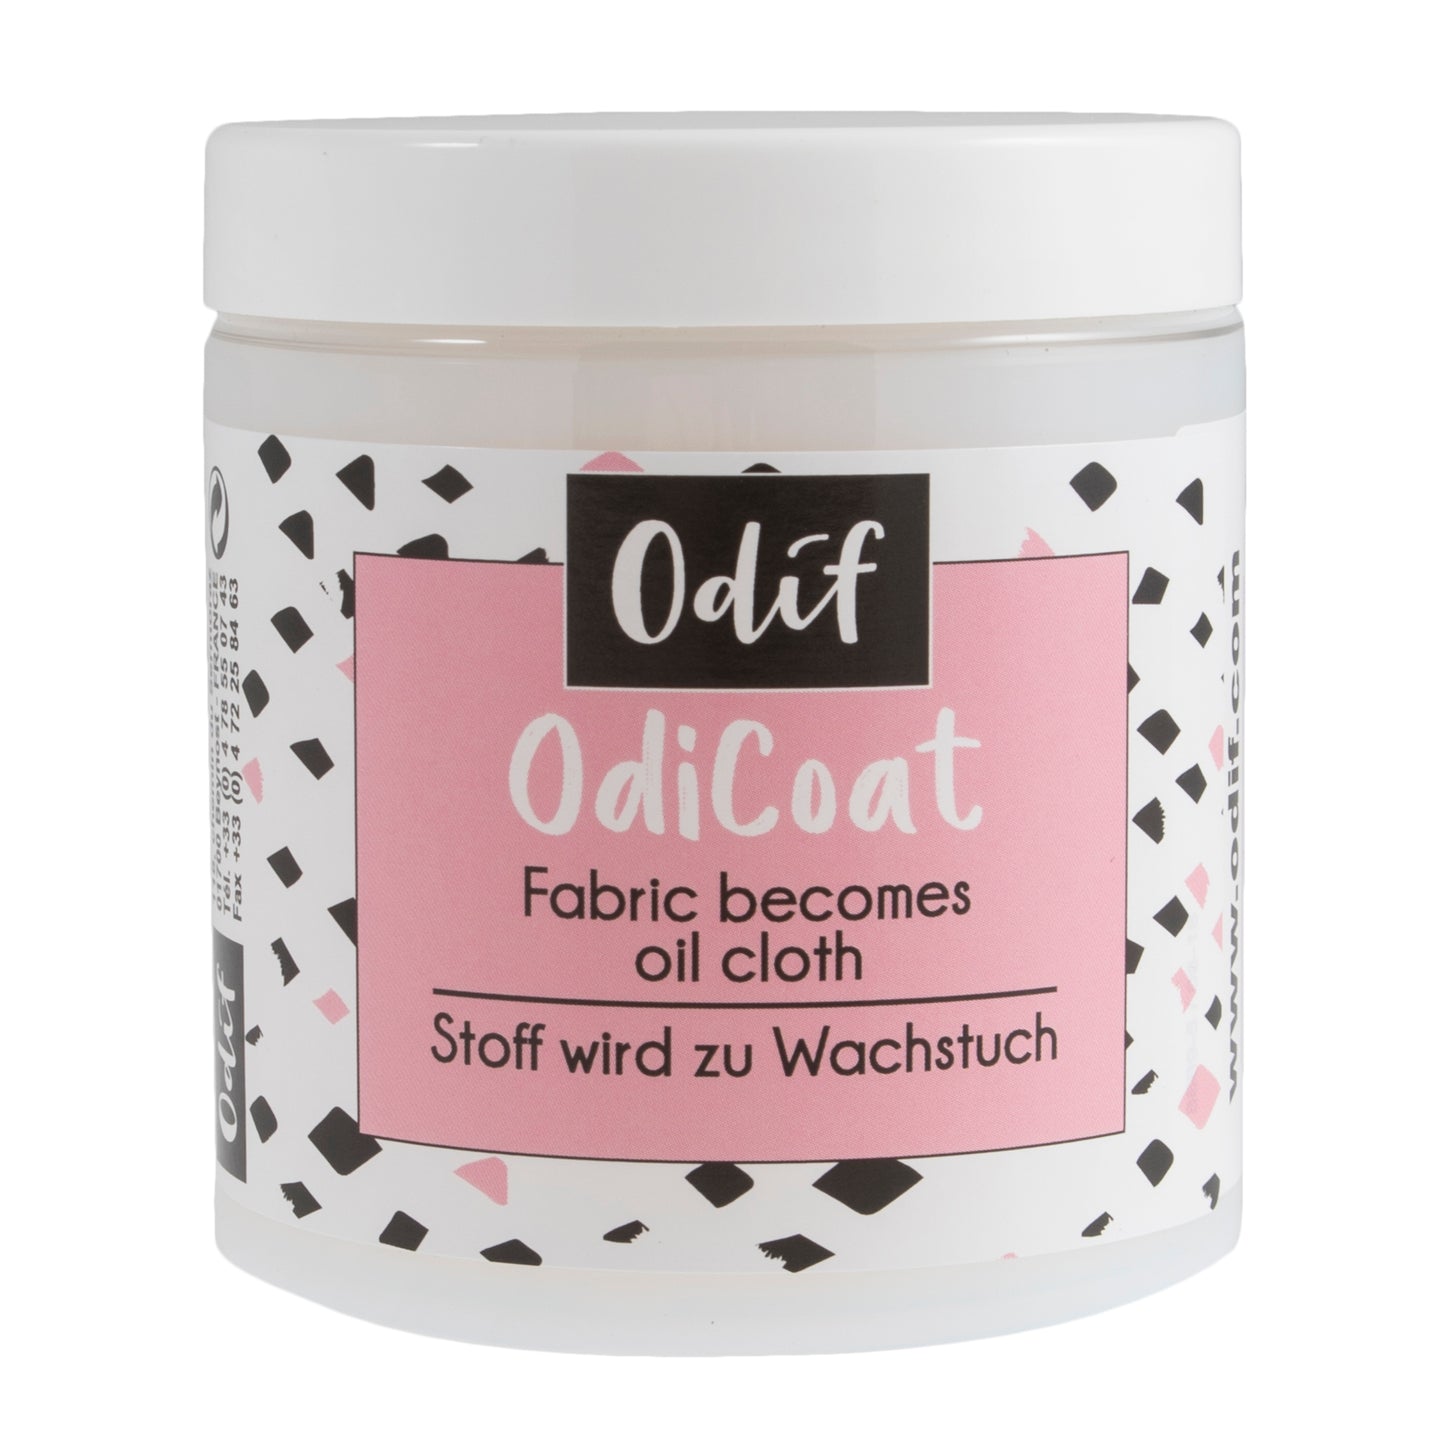 Odicoat by Odif - Fabric coating Gel